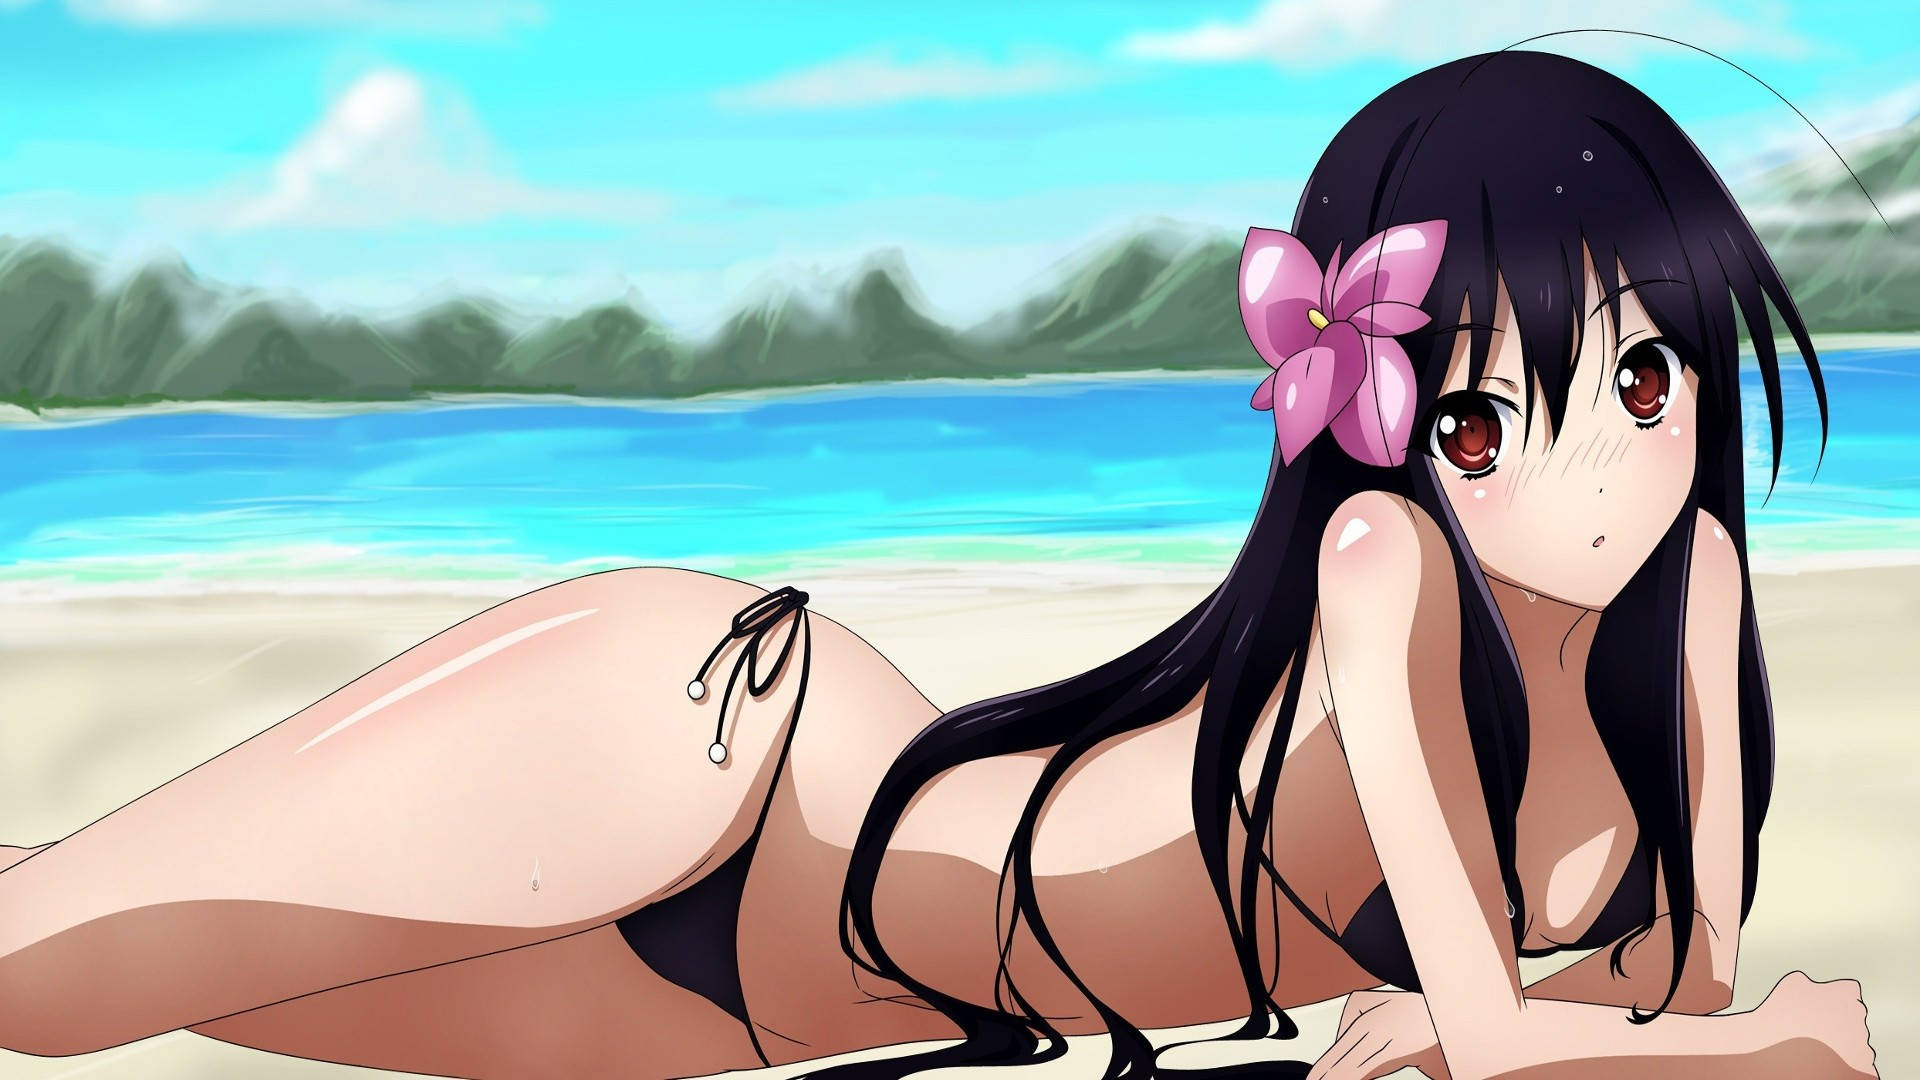 Download Anime Woman Bikini At Beach Wallpaper 